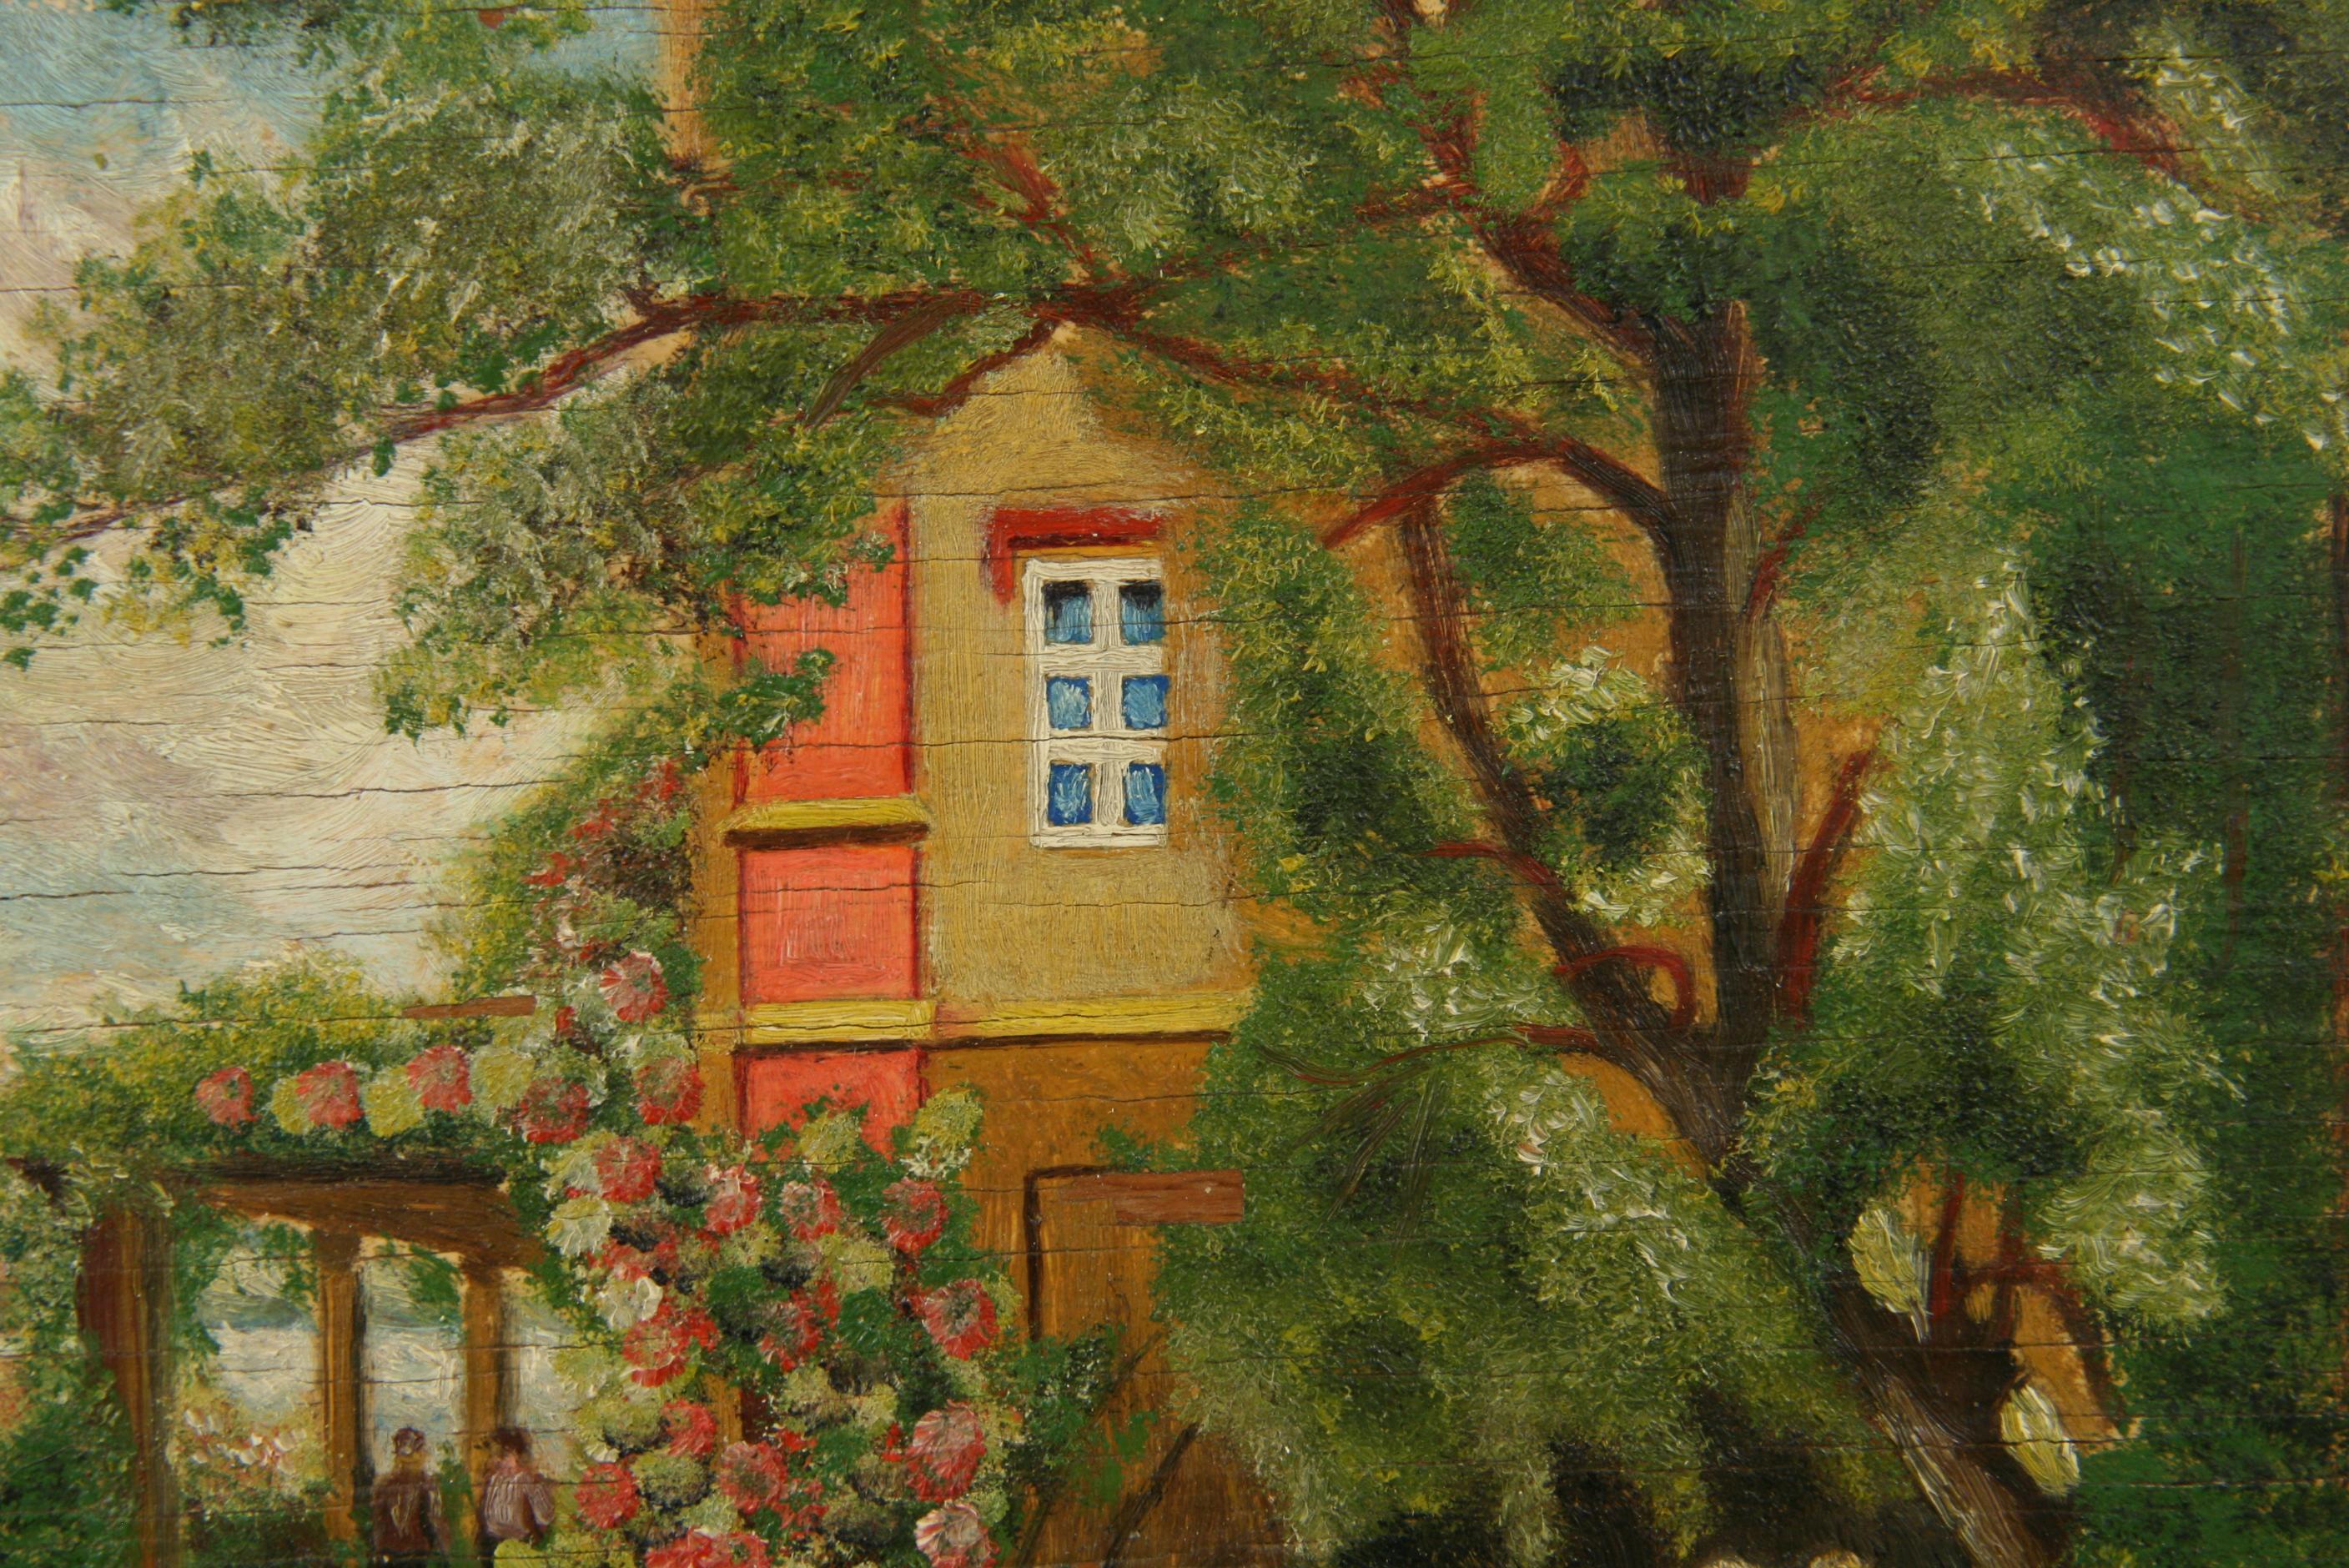 5-3499 Oil on wood panel of a Lake Como garden landscape
Set in an ornate wood frame